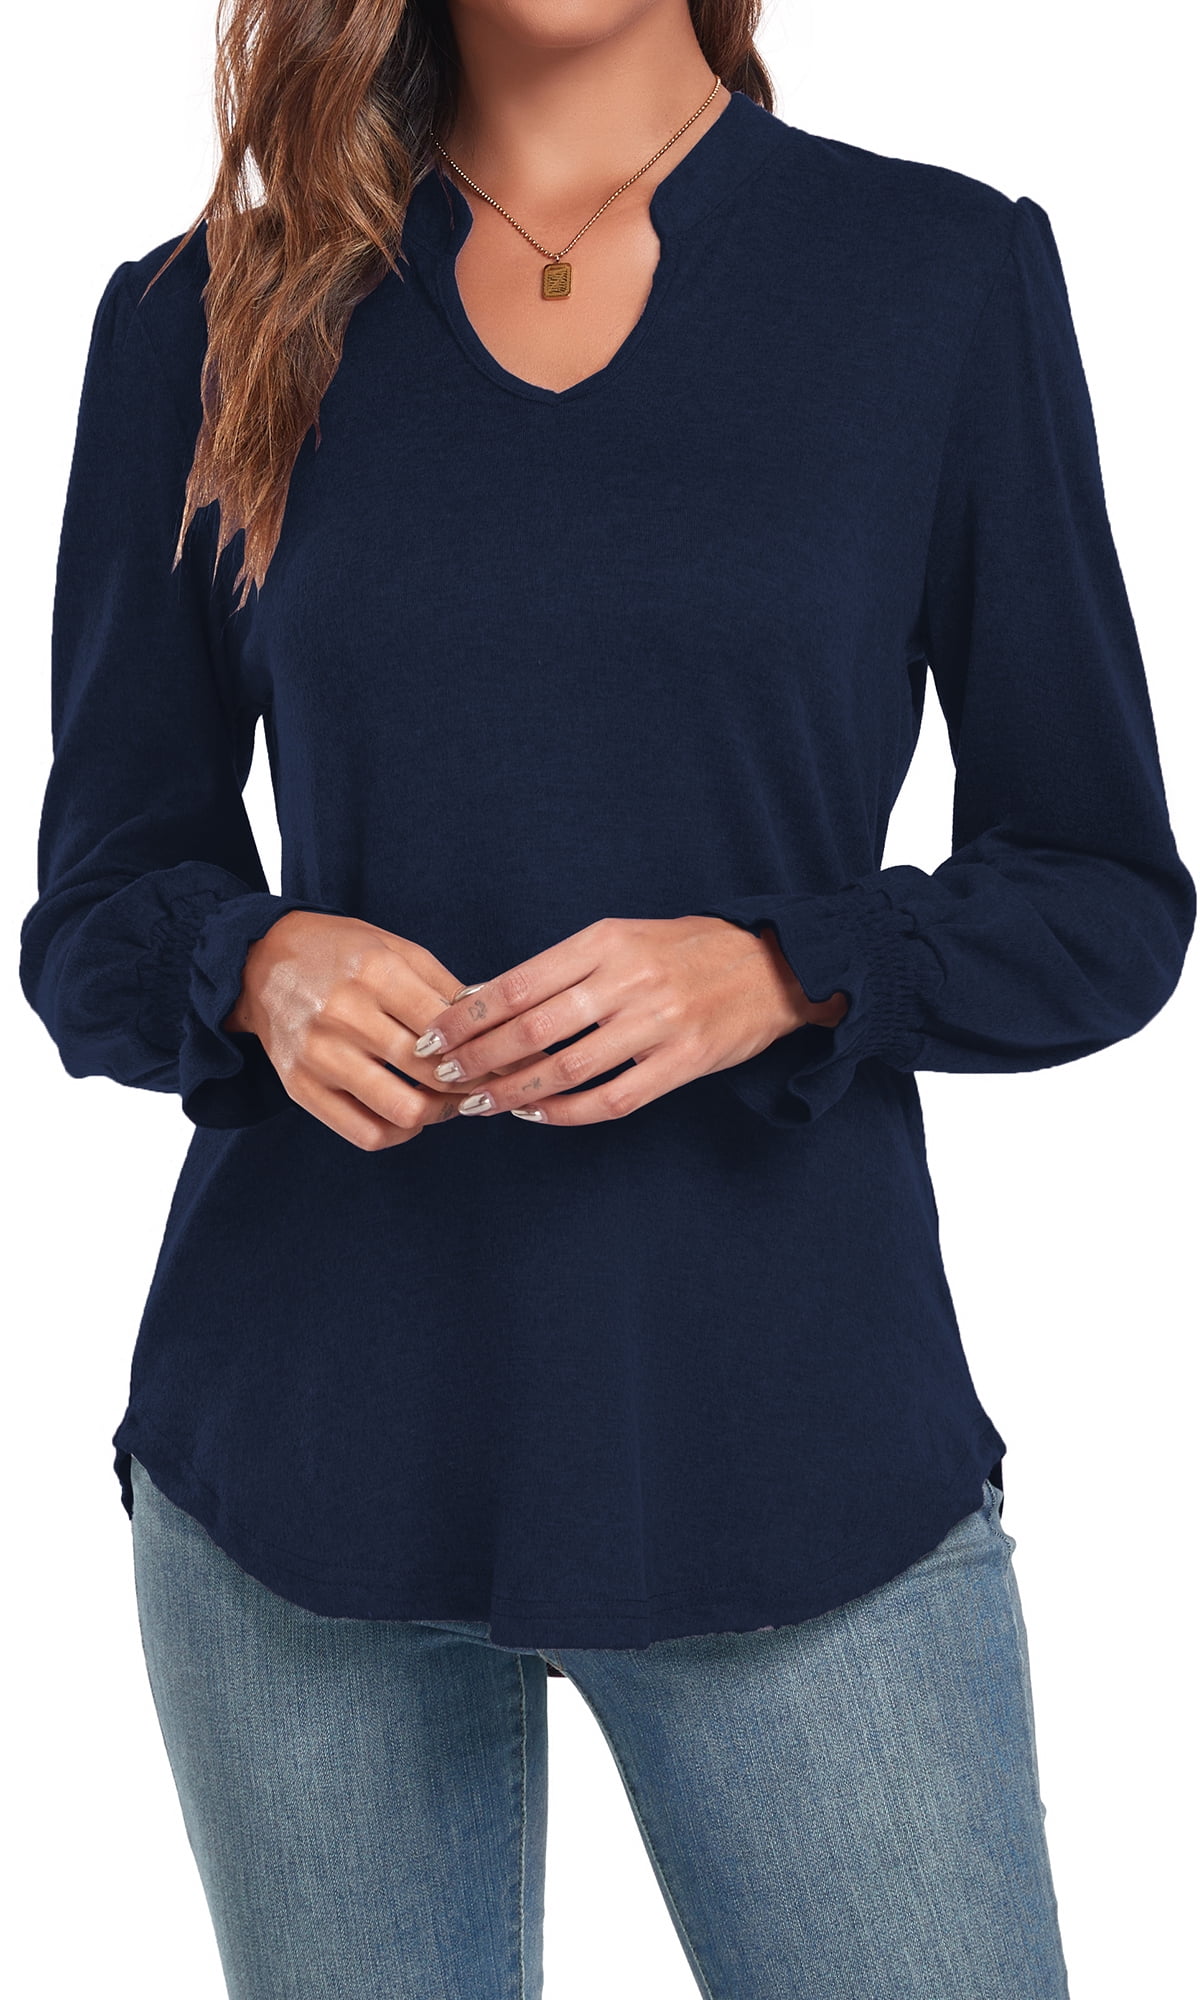 Anyjoin Women's Ruffle Puff Long Sleeve Tunic Tops Casual V-Neck Sweatshirts